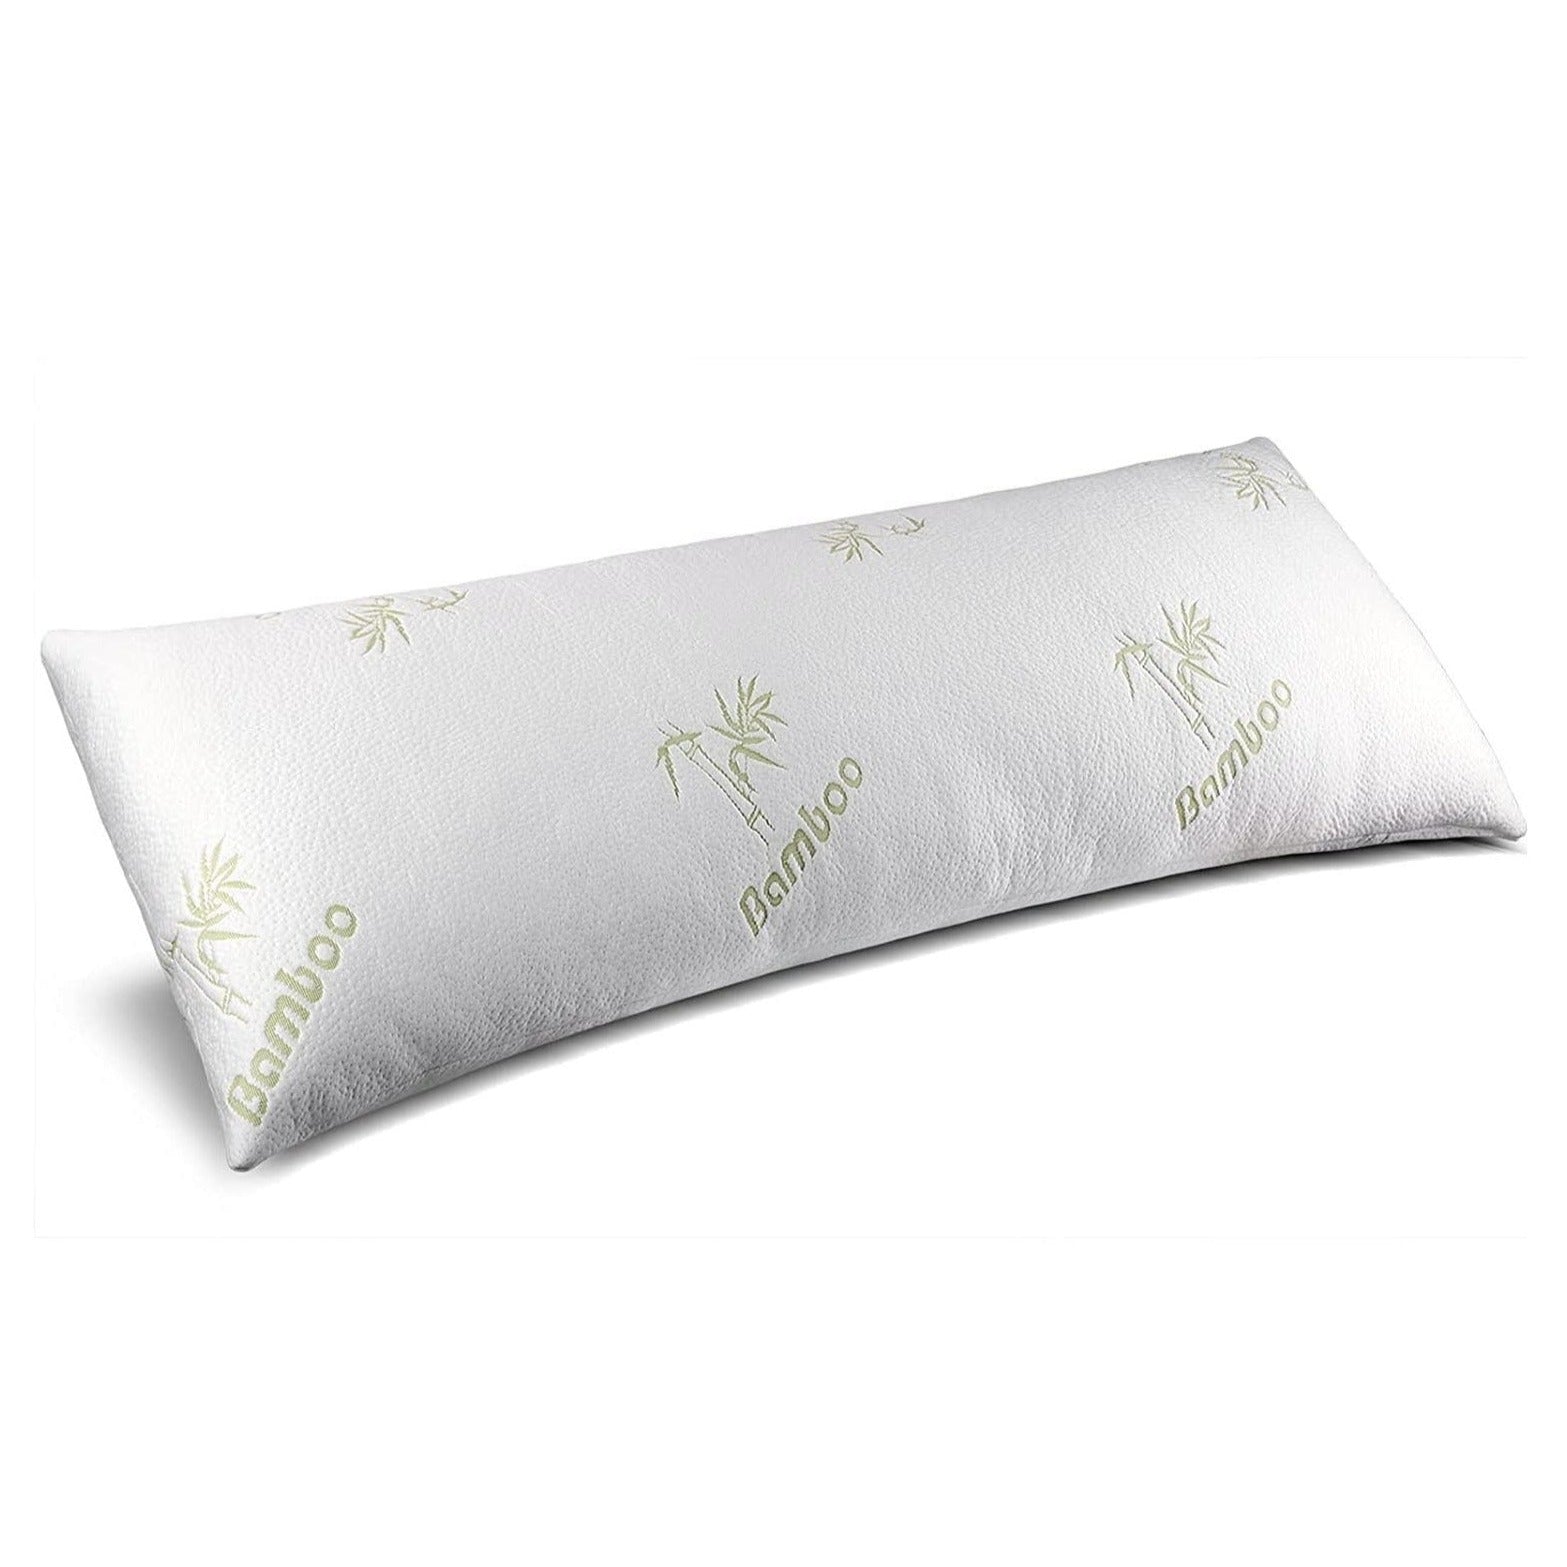 Memory Foam Body Pillow - Bamboo Cover Medgear Care